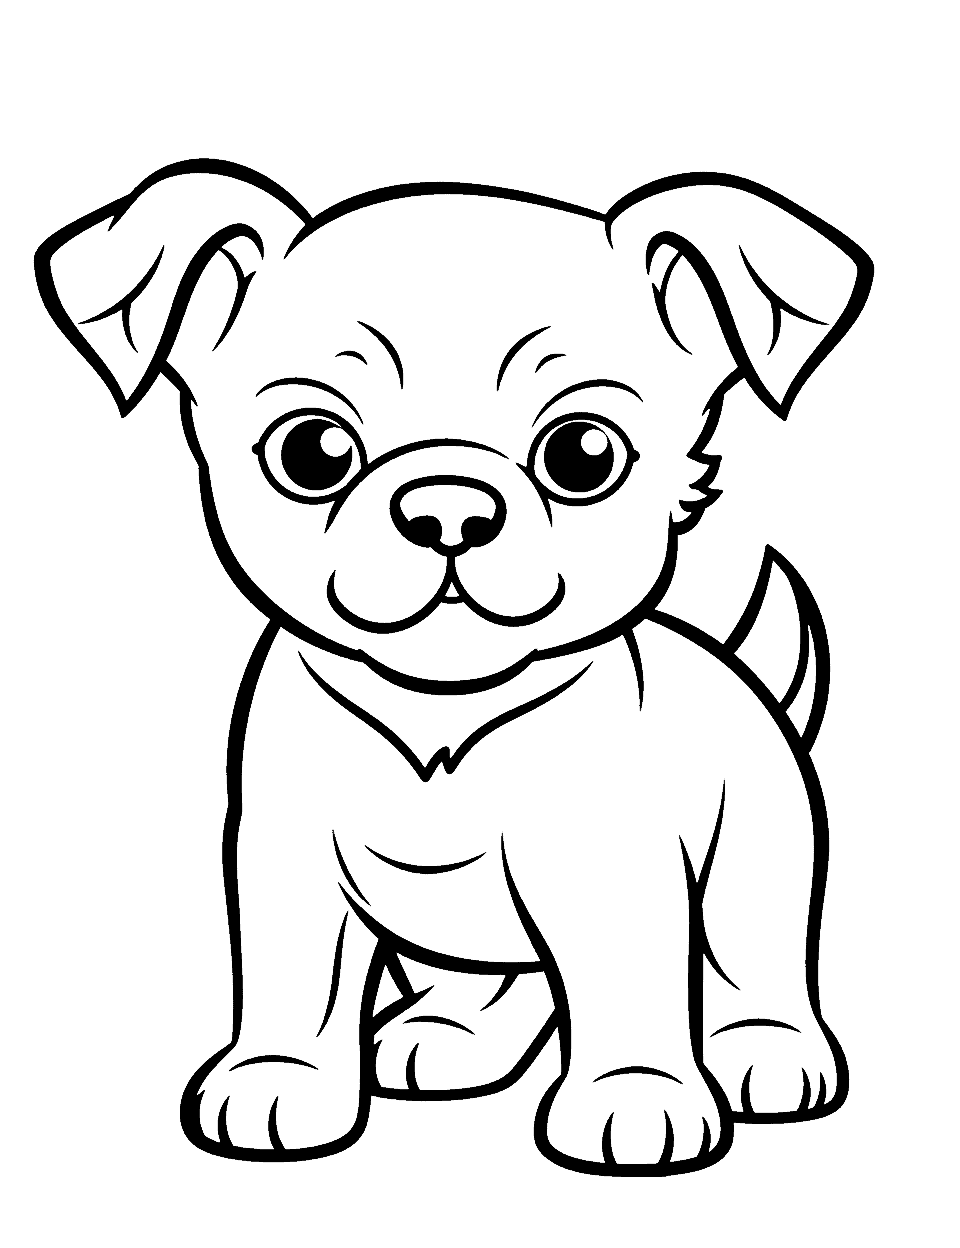 Kawaii Art Adorable Bulldog Puppy Coloring Page - A Bulldog puppy drawn in a cute Kawaii style, making it perfect for young kids.